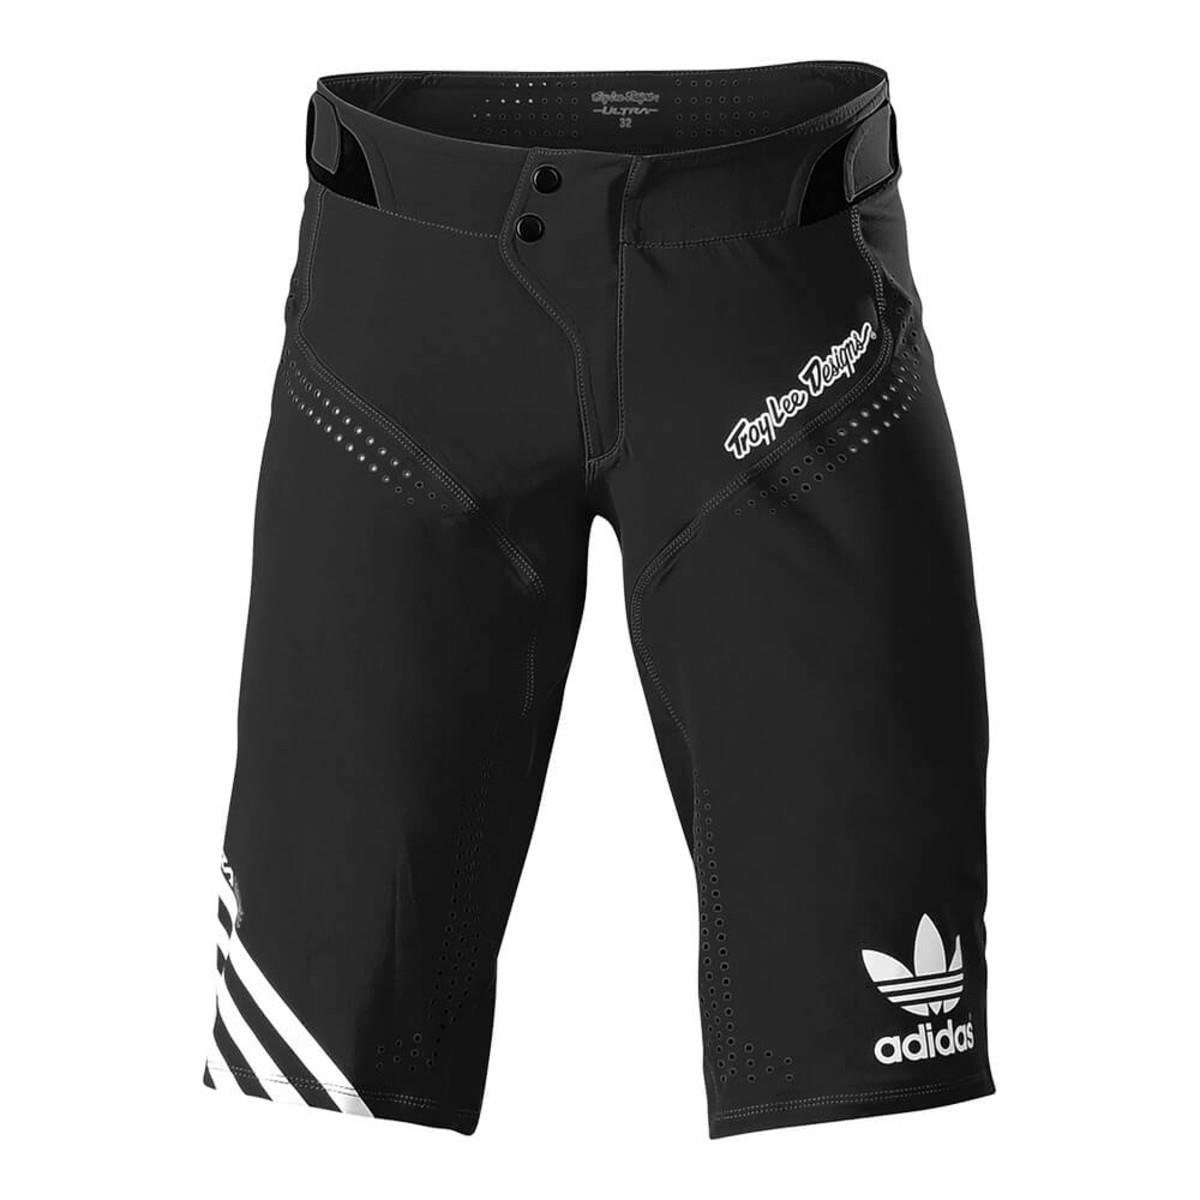 adidas mountain bike shorts